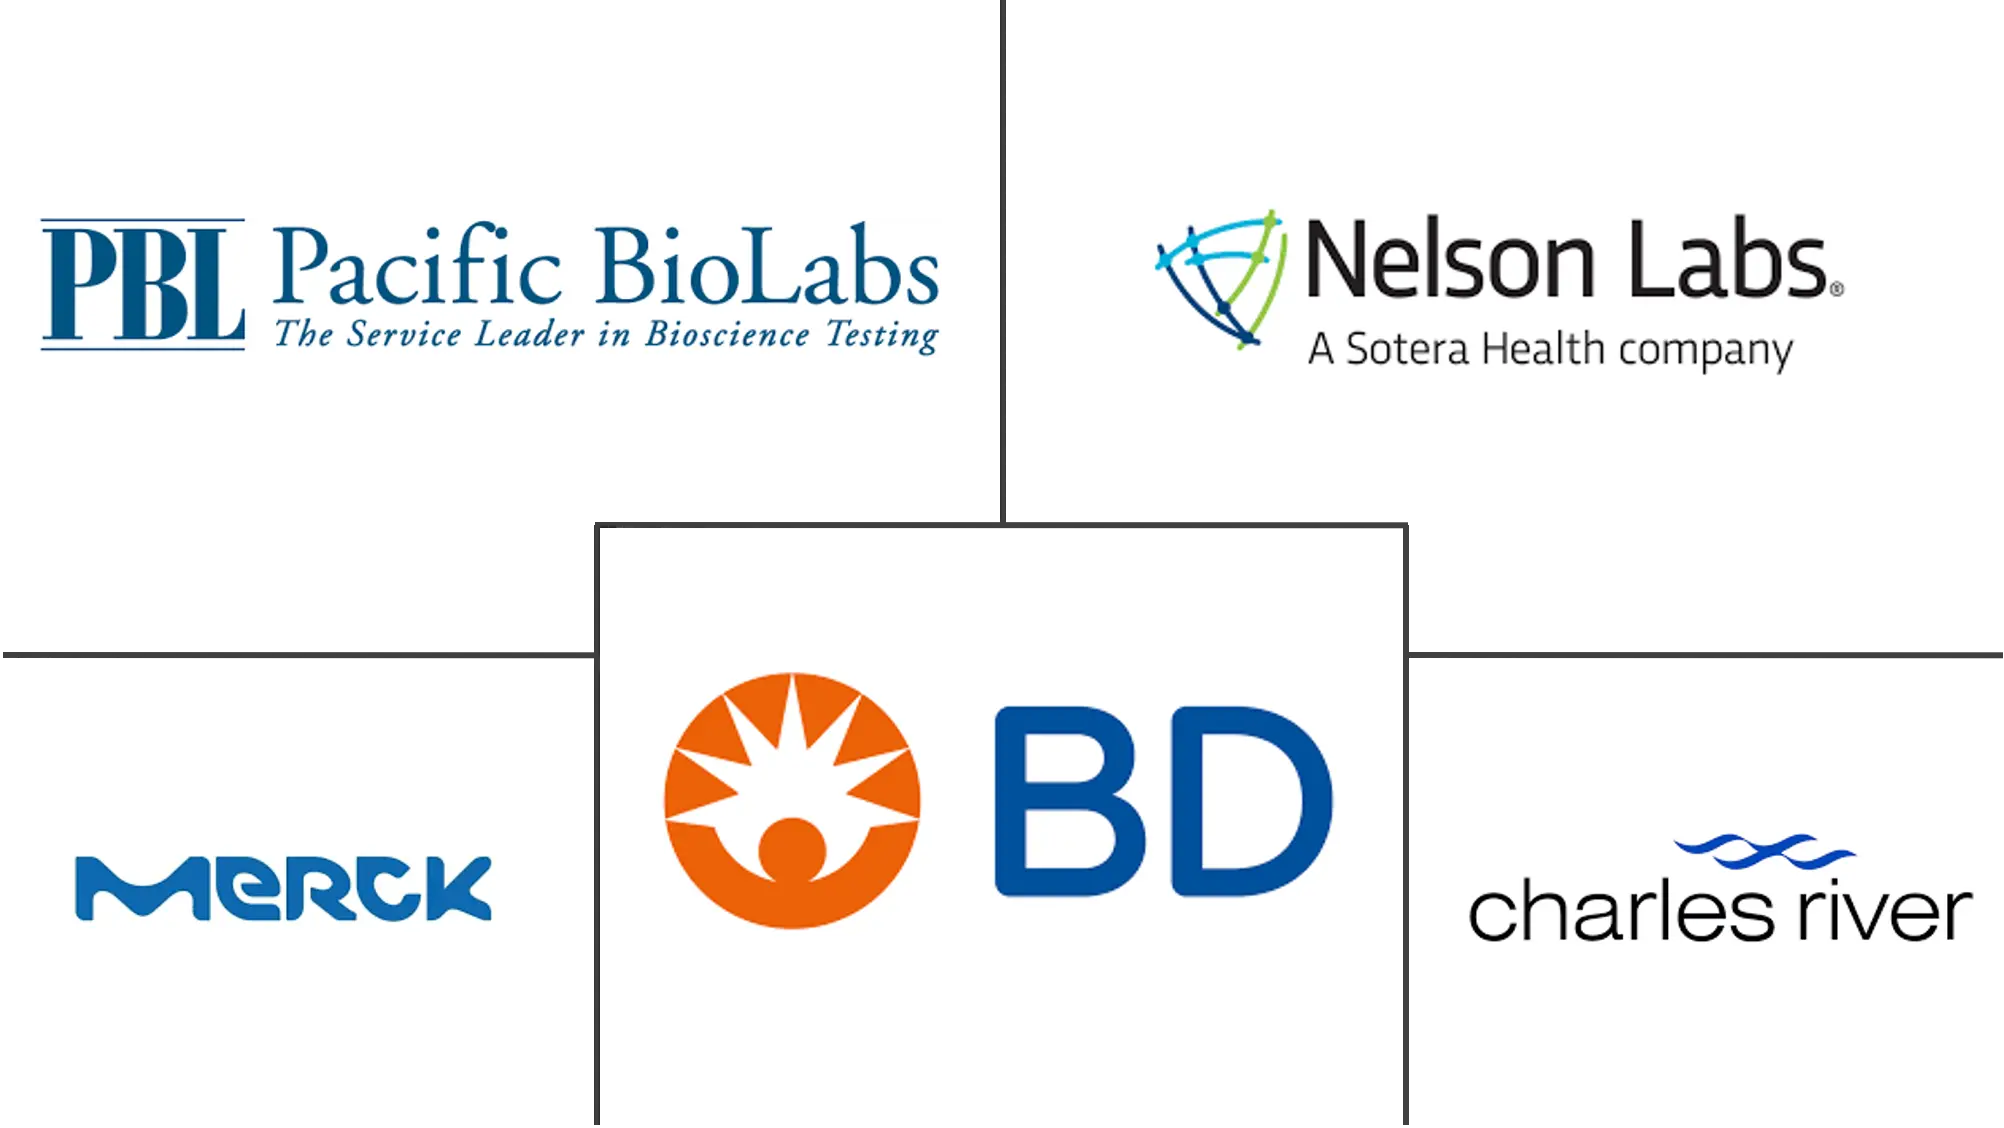 bioburden testing market major players